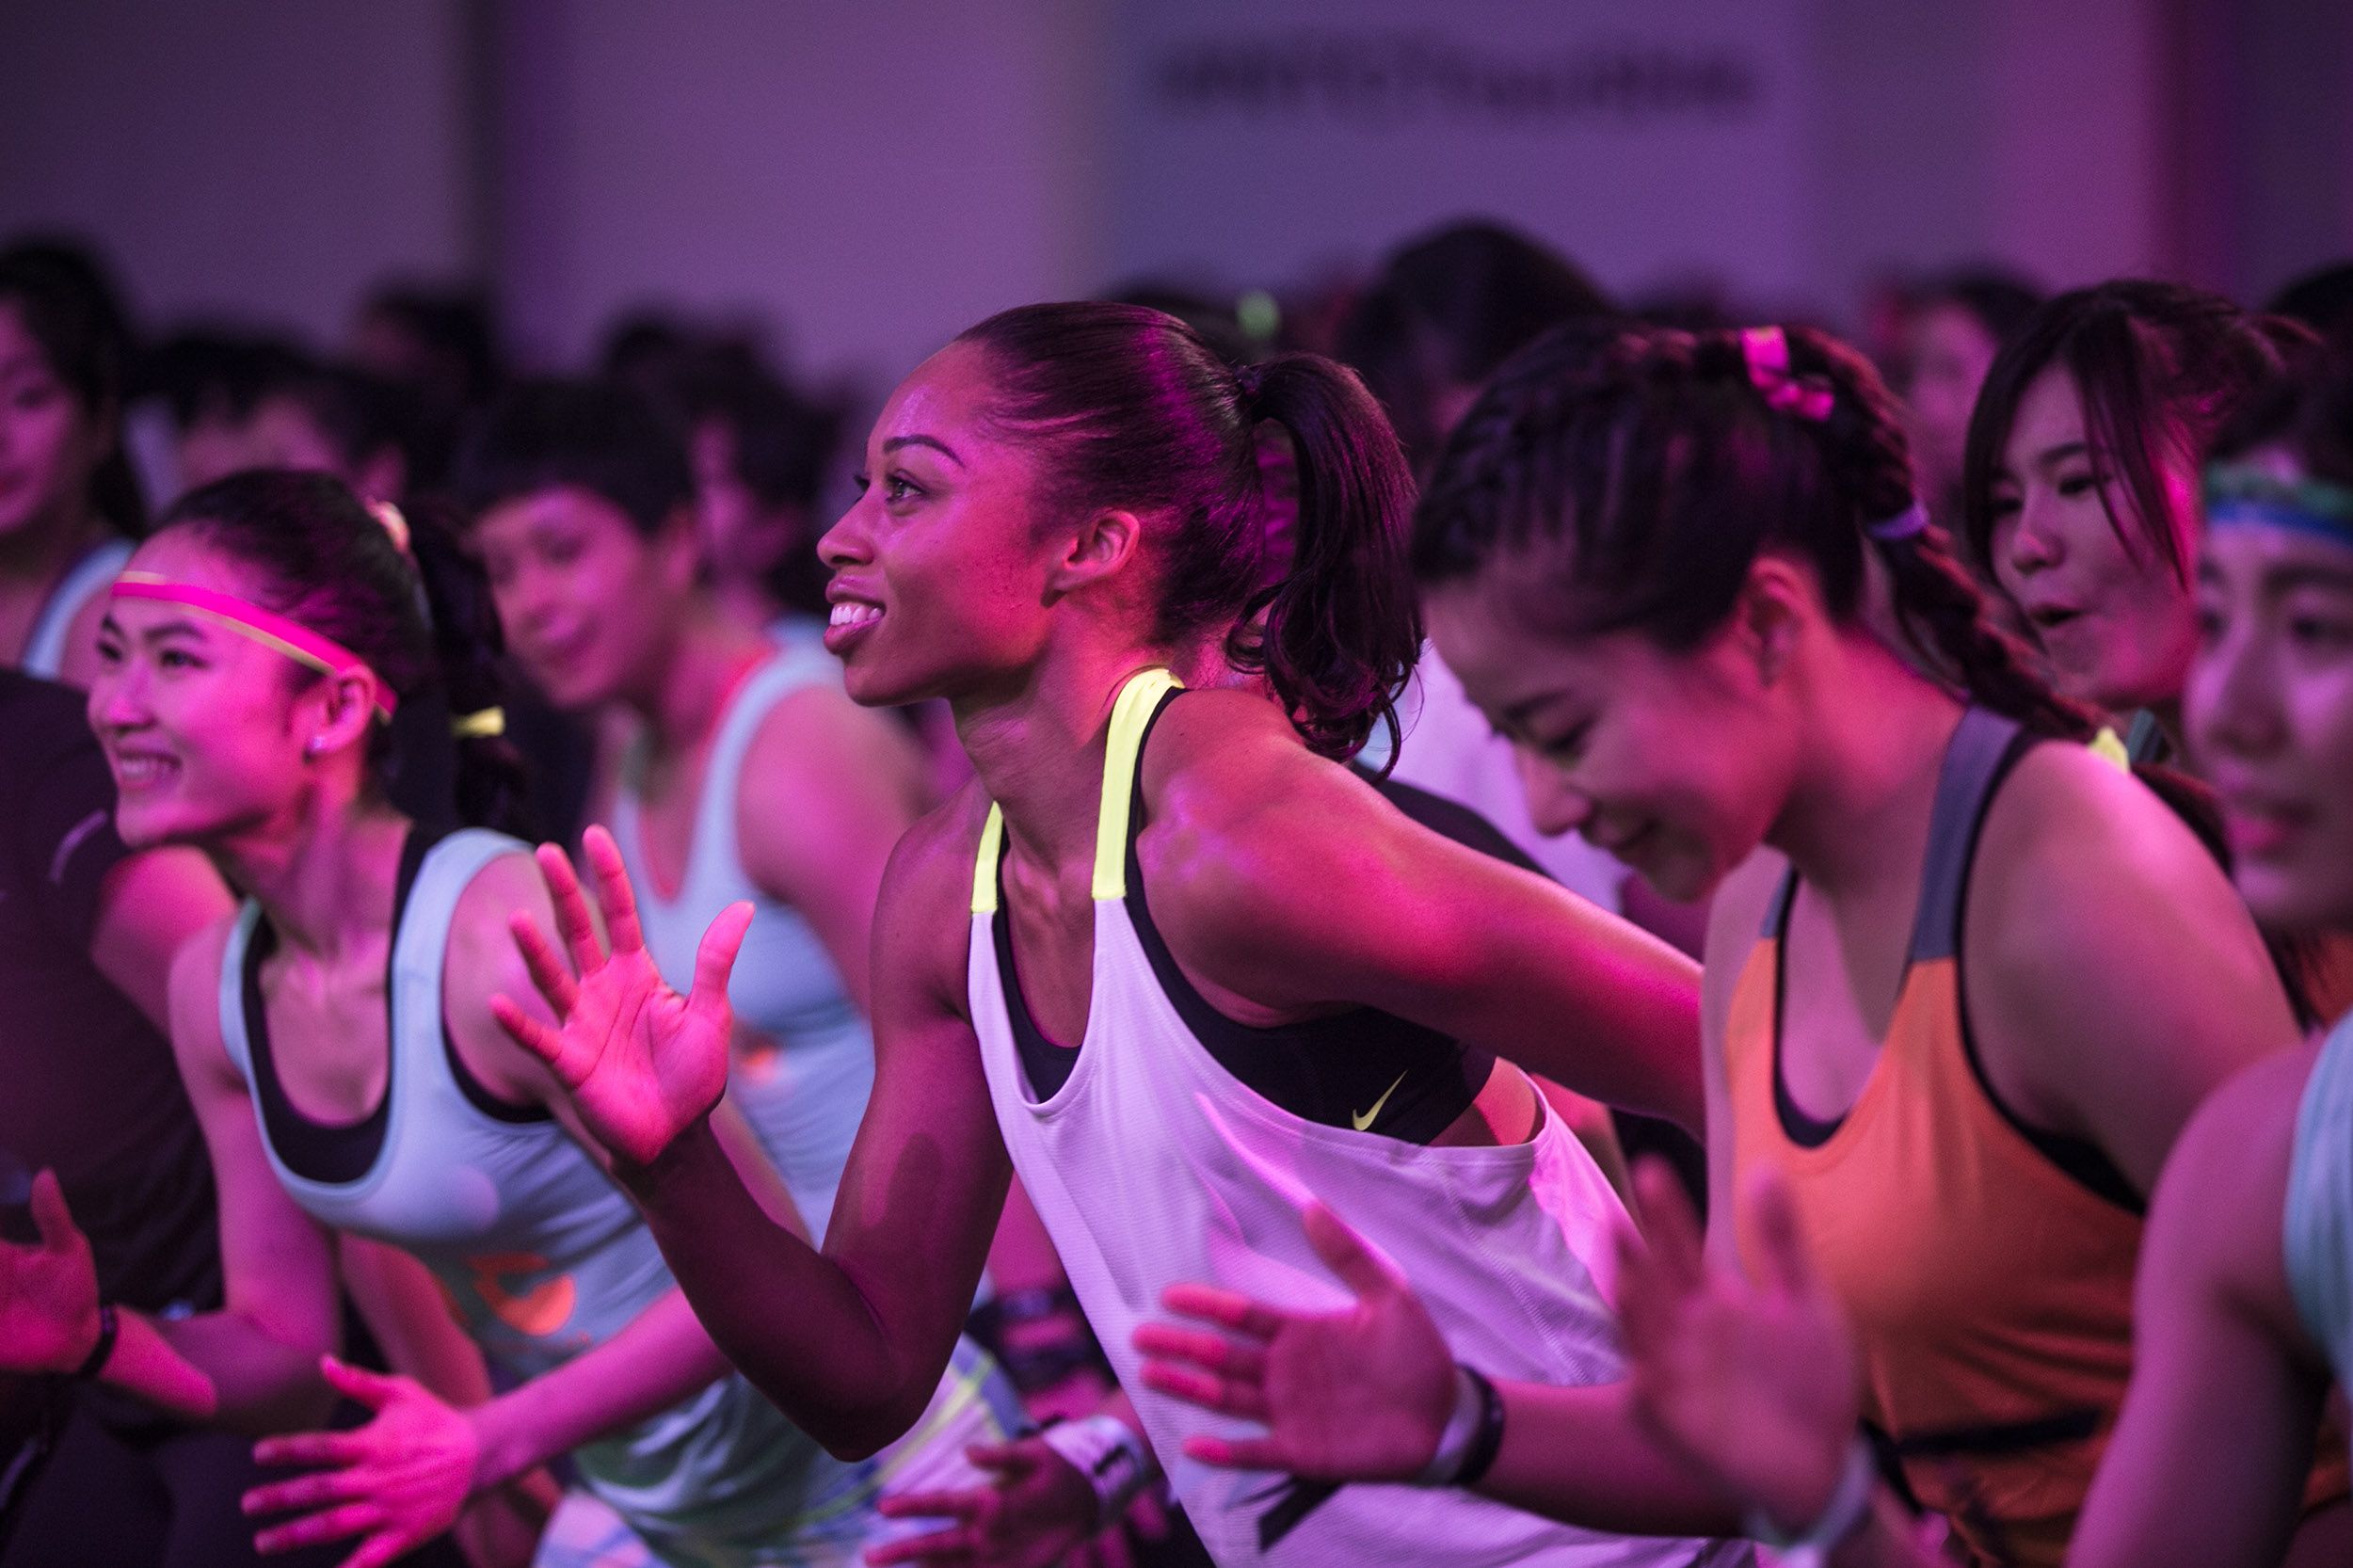 BETTER FOR IT: Η Nike δίνει δύναμη στις γυναίκες για να βγάλουν τον καλύτερό τους εαυτό